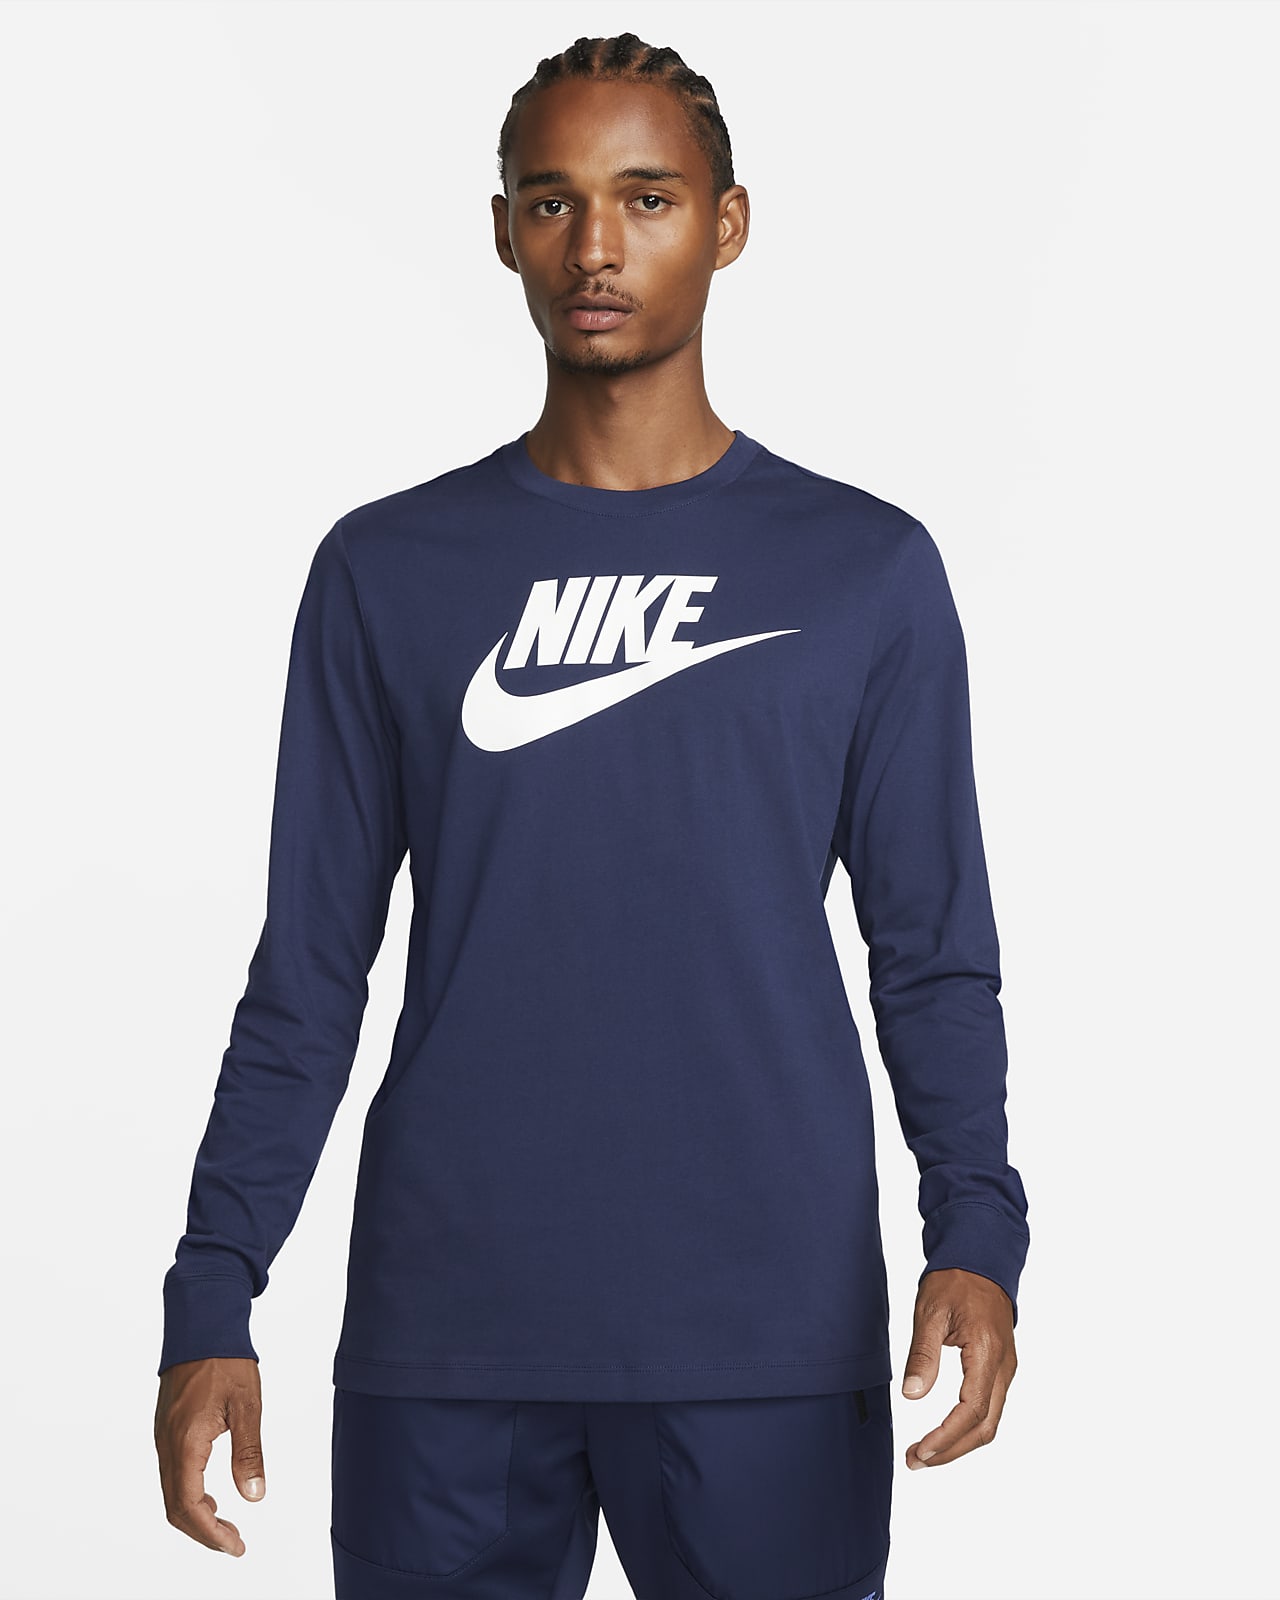 Byg op Beregning Ministerium Nike Sportswear Men's Long-Sleeve T-Shirt. Nike.com